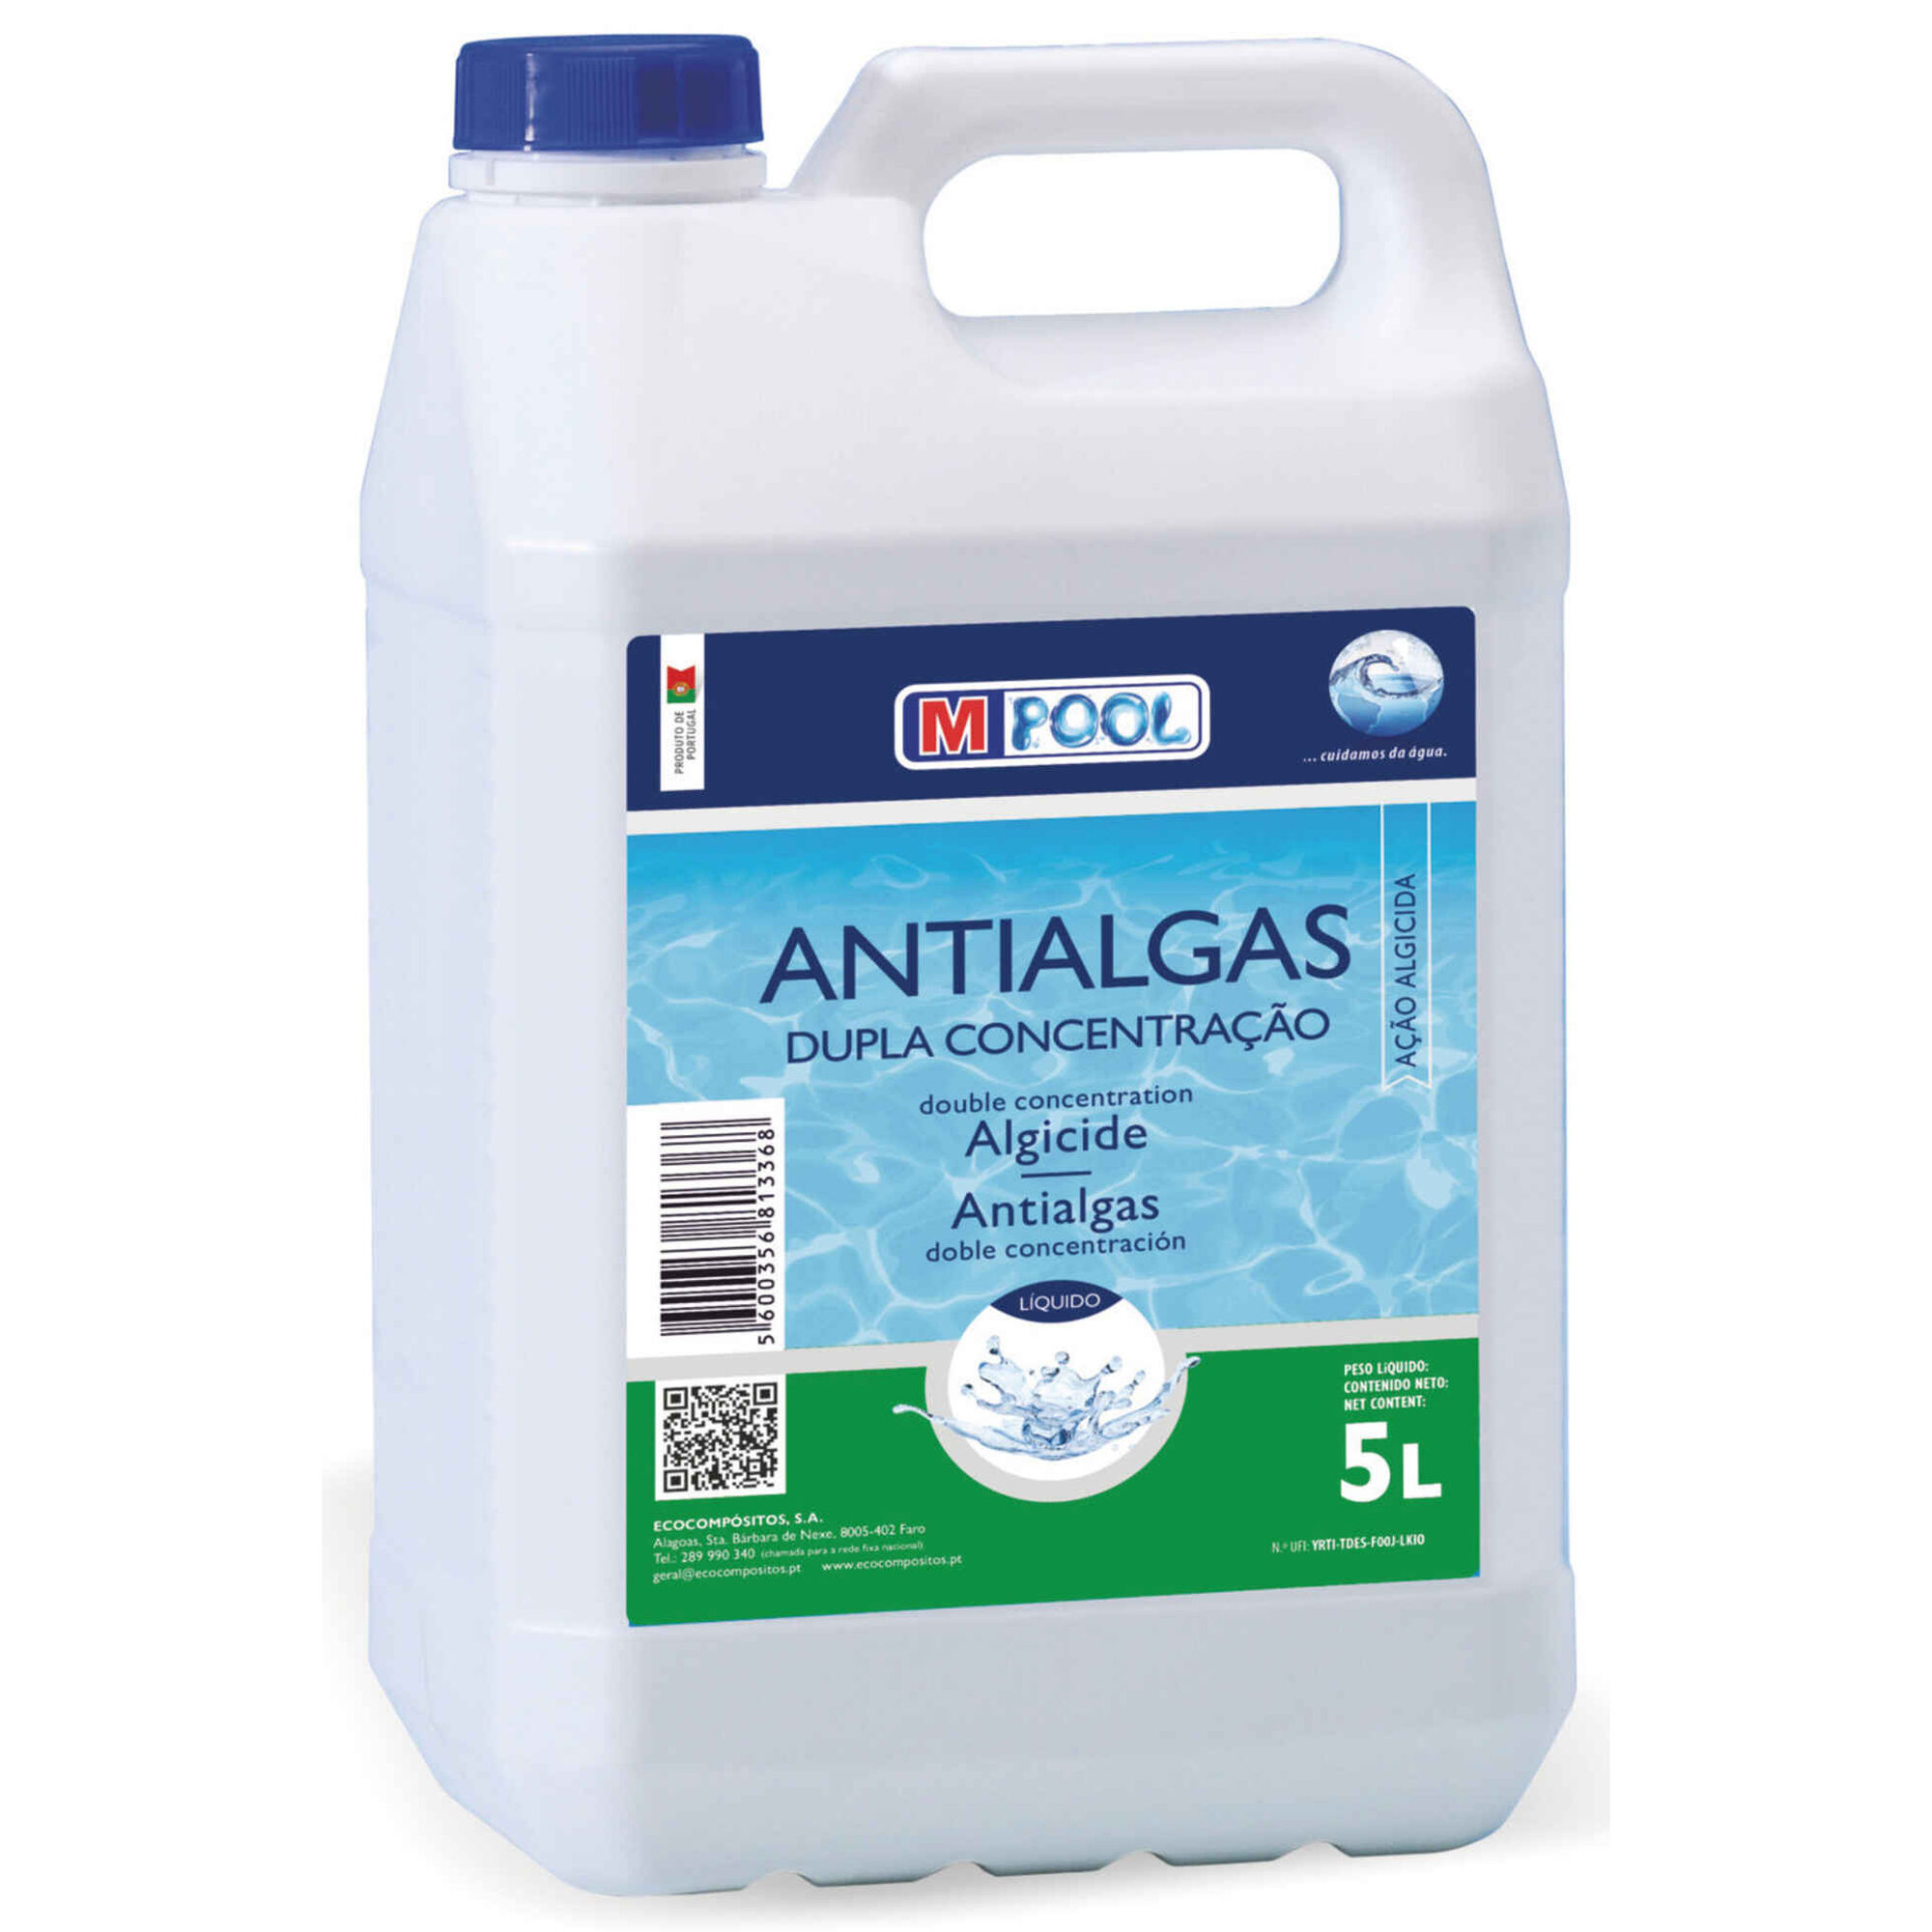 Anti-Algas